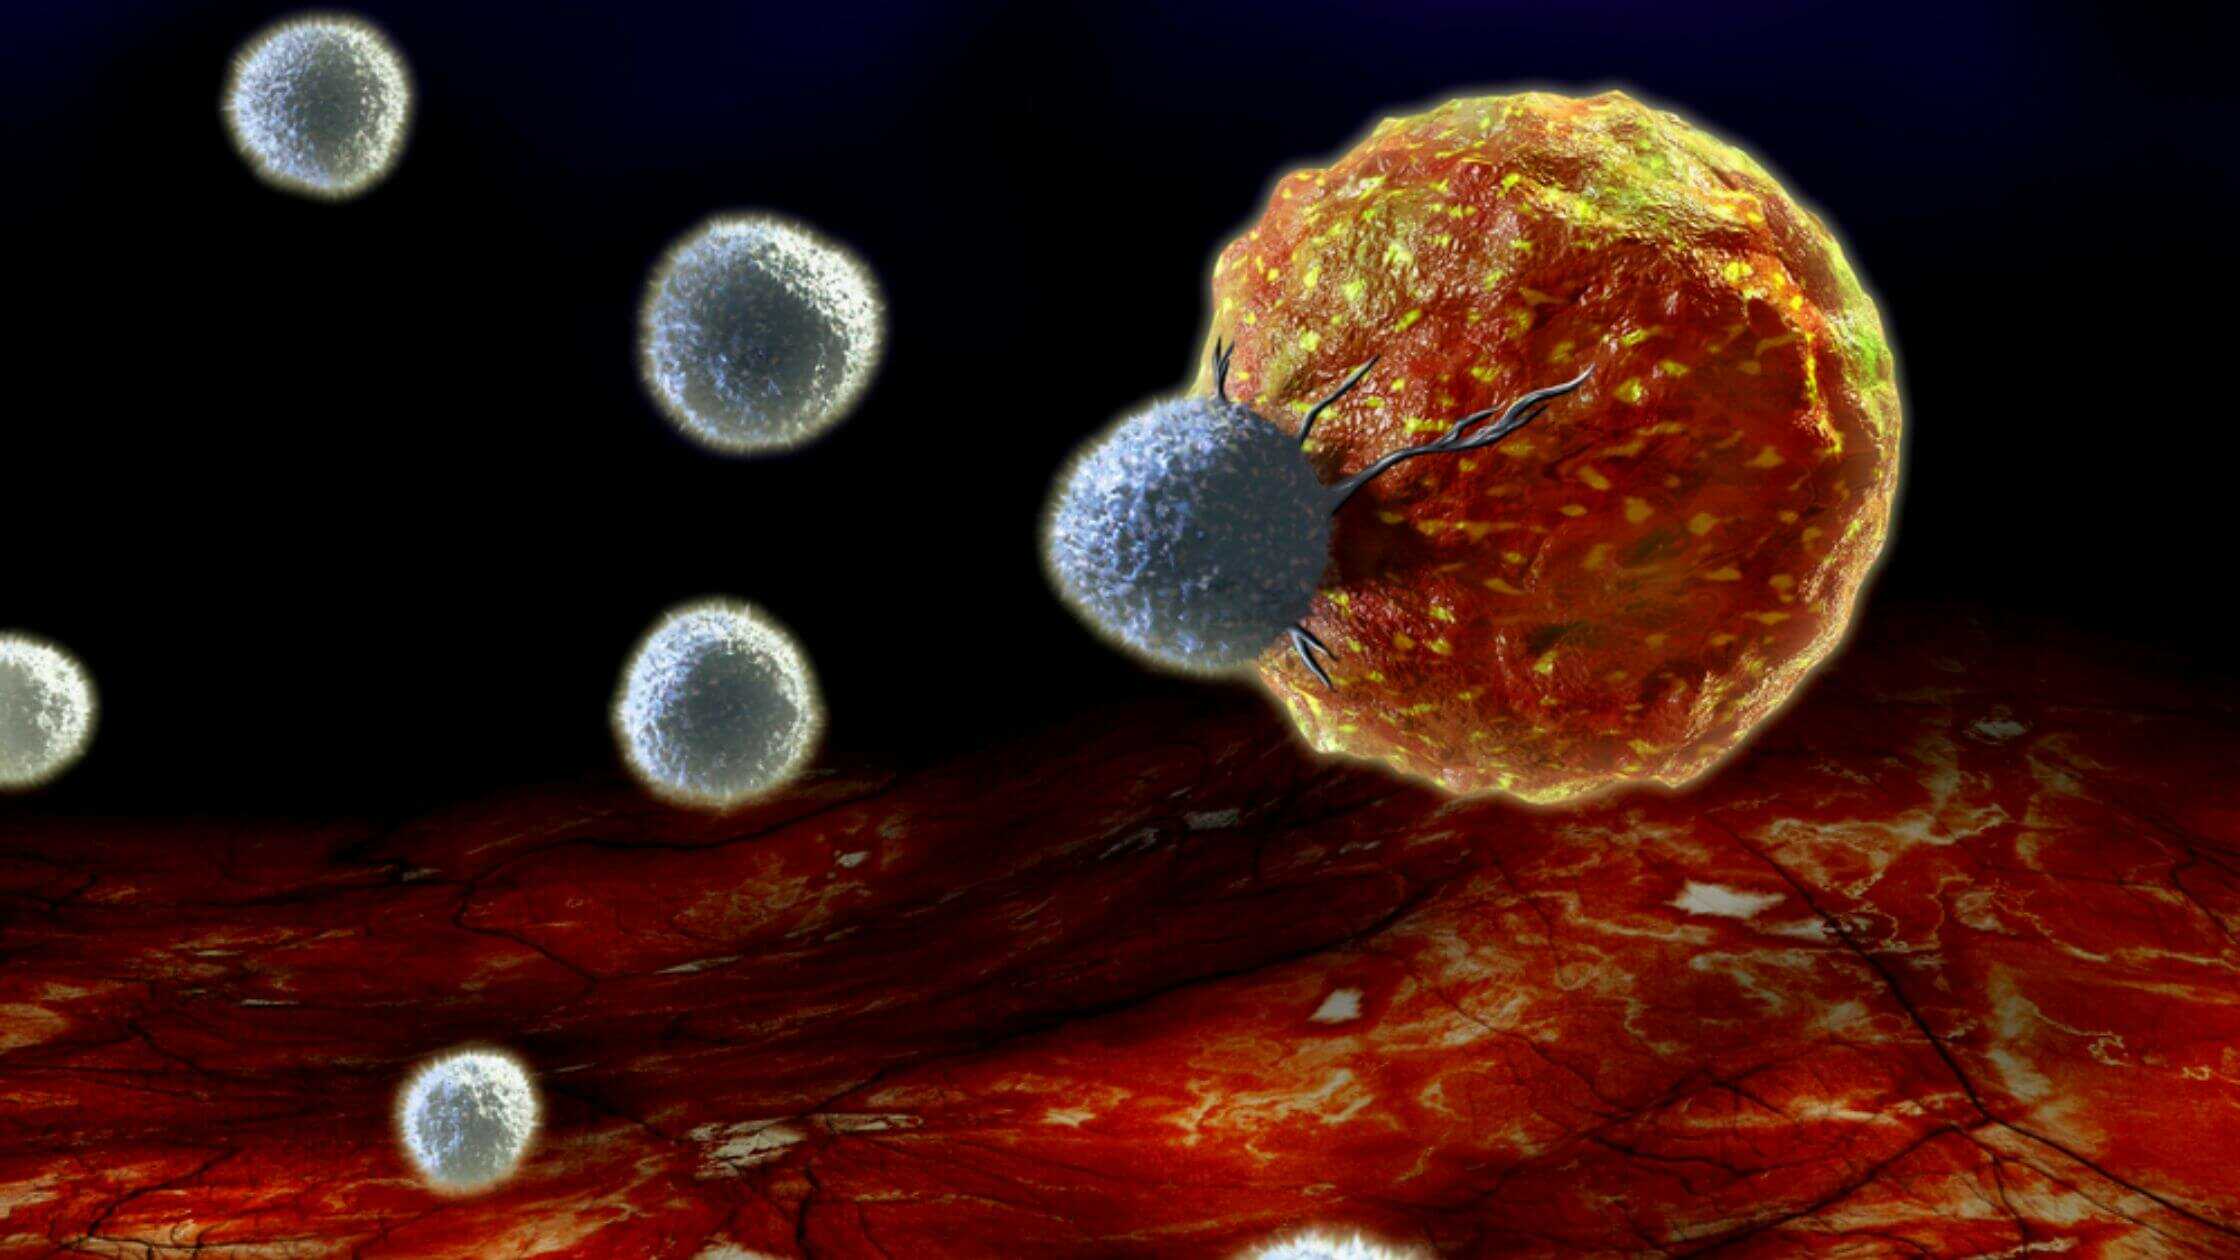 The Recently Found Method Speeds Up Immune Cells